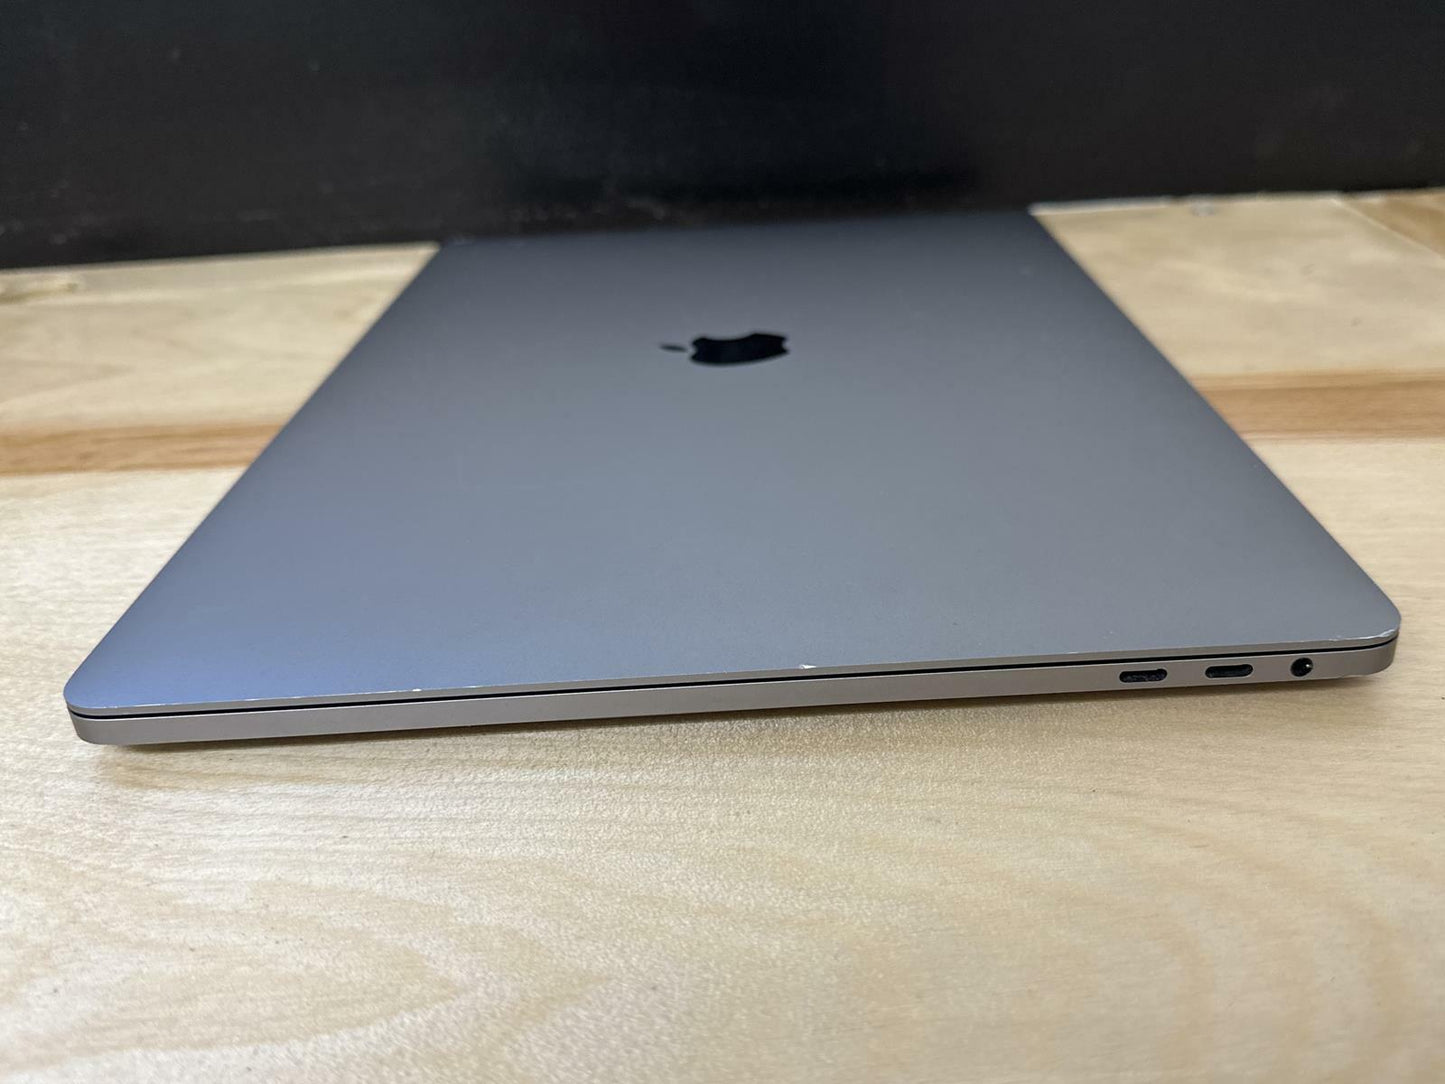 Apple MacBook Pro 15" 2019 (Intel Core i7 2.4Ghz, 16GB, 512GB, Radeon 560X) Gray